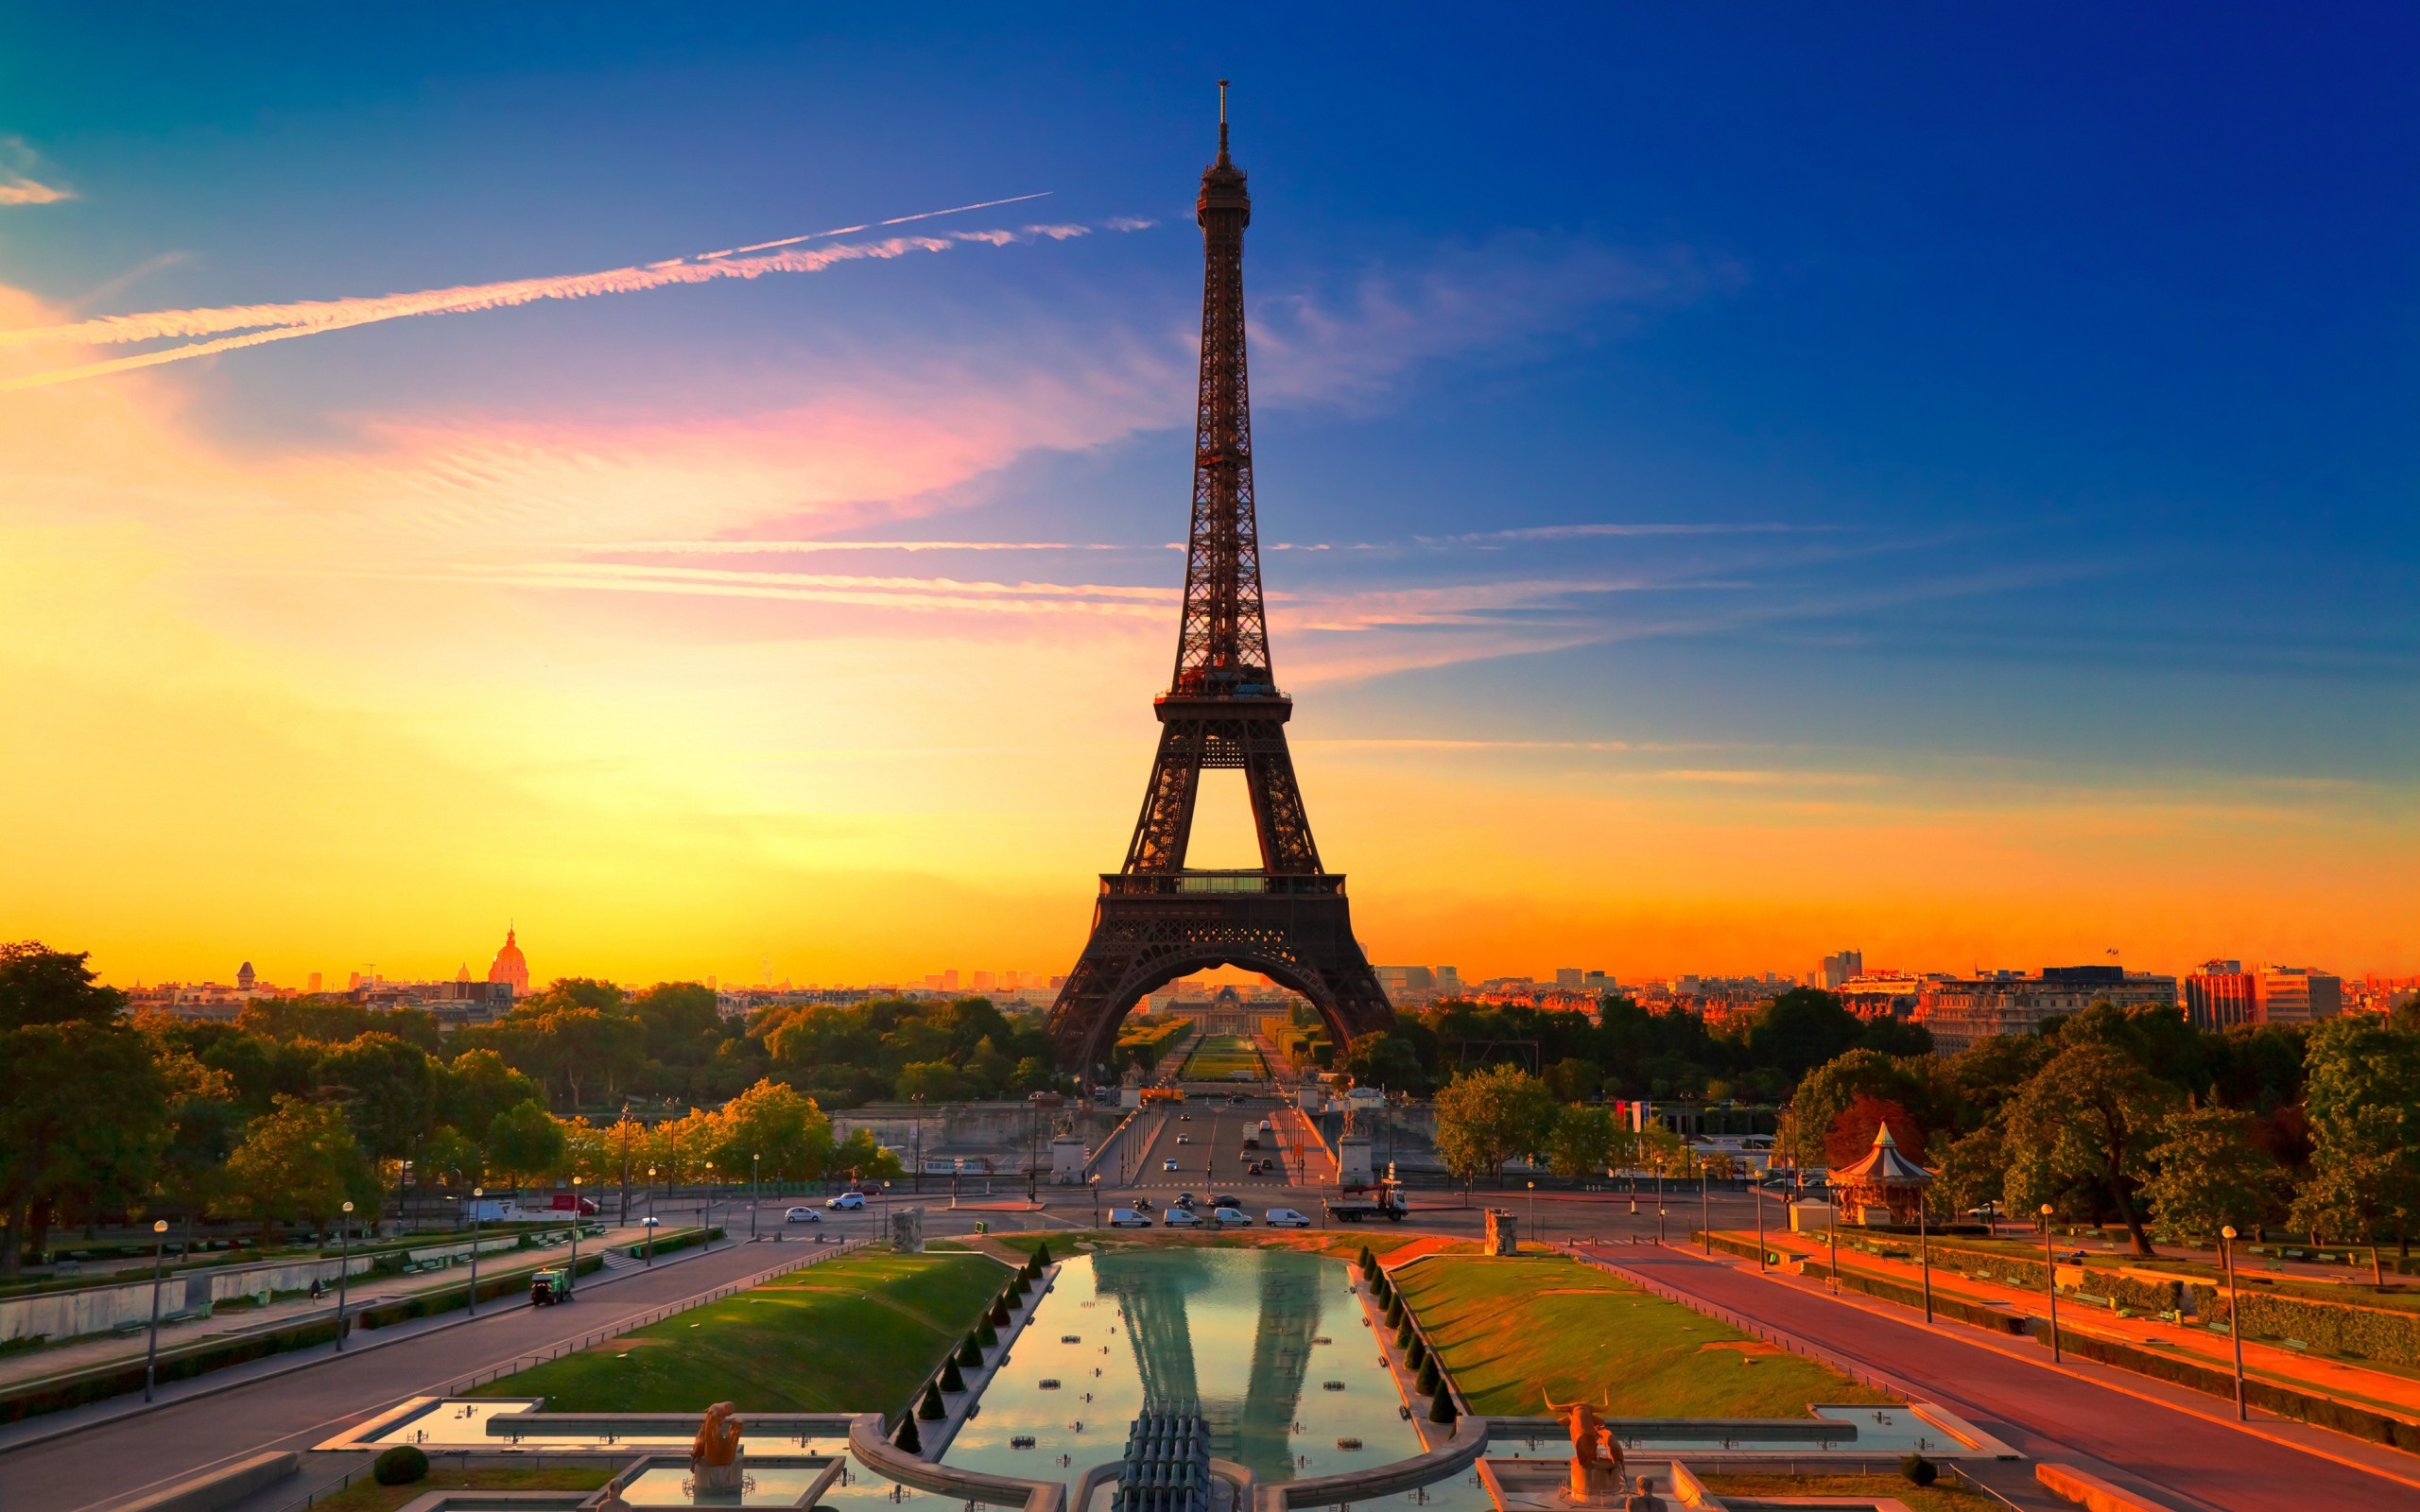 General 2560x1600 Paris Eiffel Tower HDR architecture city sunset France cityscape photography urban sky Sun Europe landmark